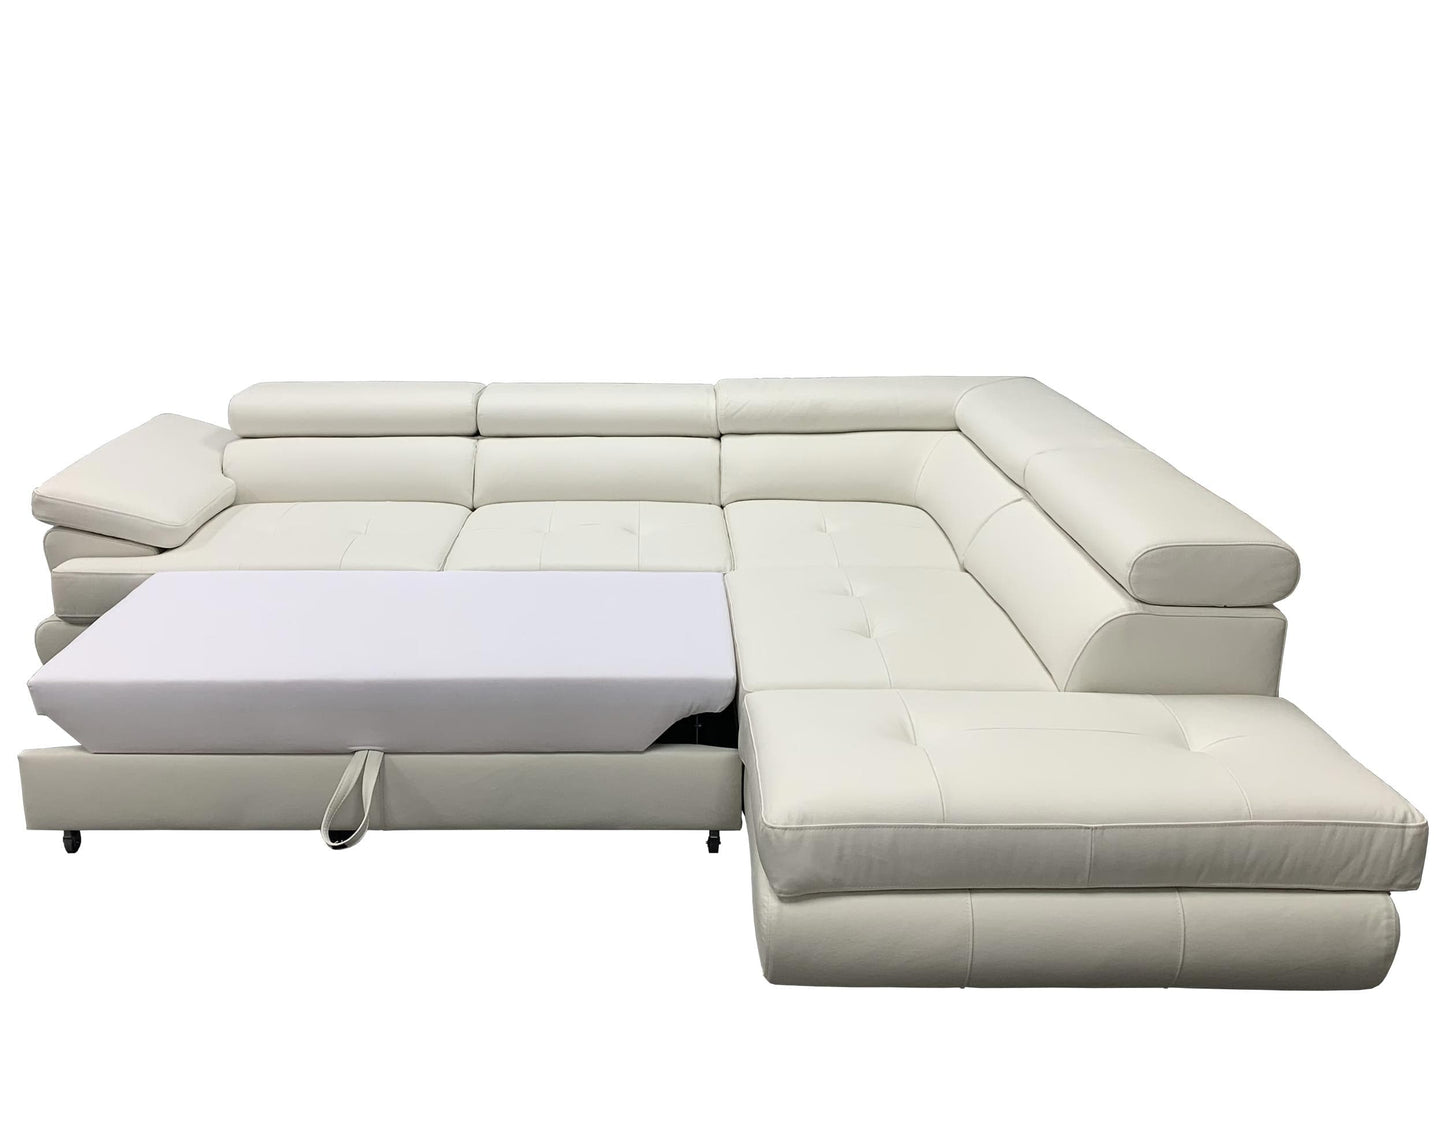 LUTON Leather Sectional Sleeper Sofa